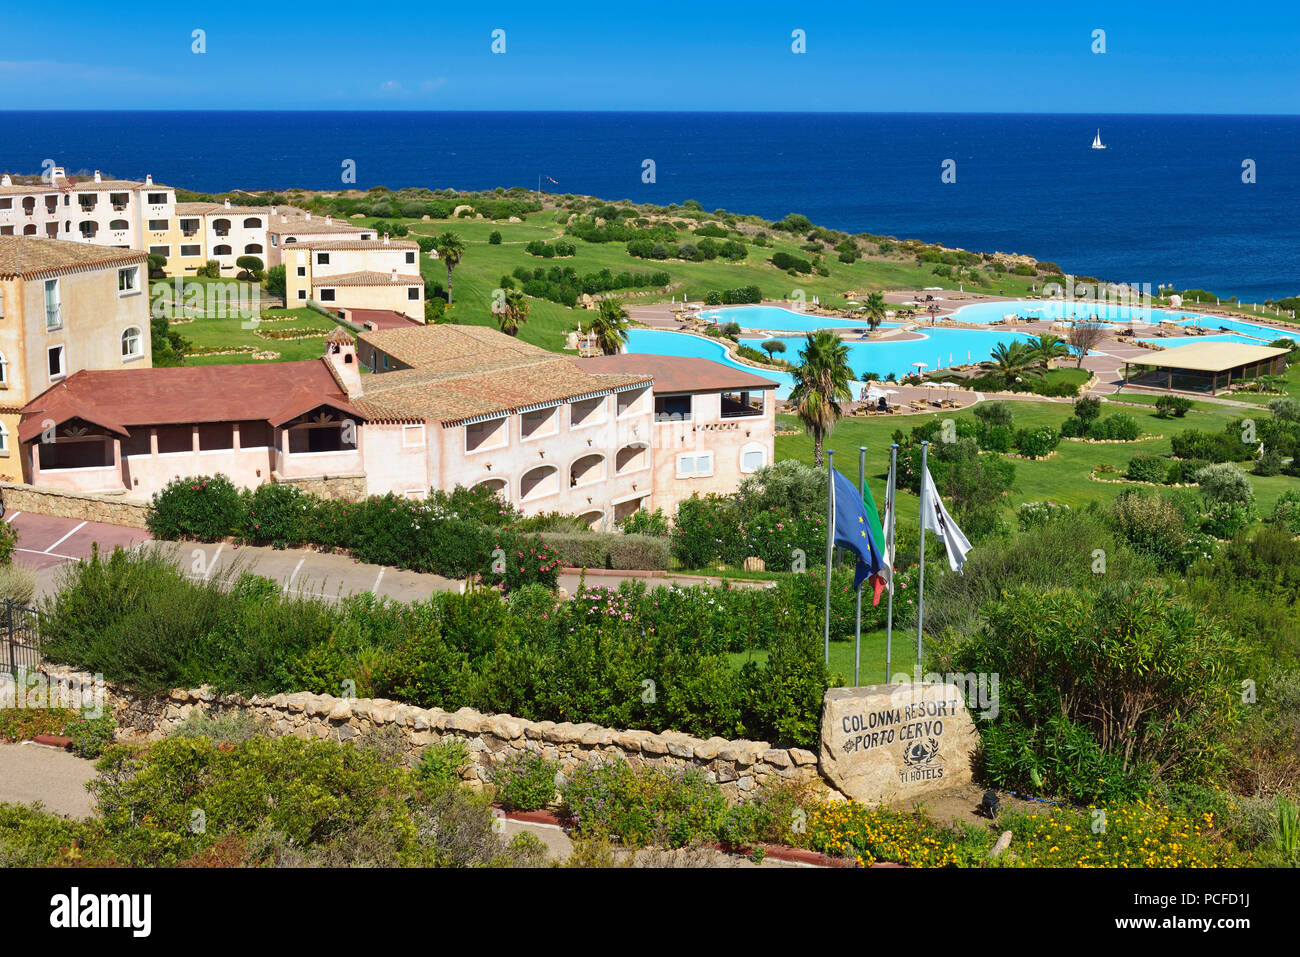 Golf Club Colonna Resort Porto Cervo, Cerdeña, Italia Foto de stock